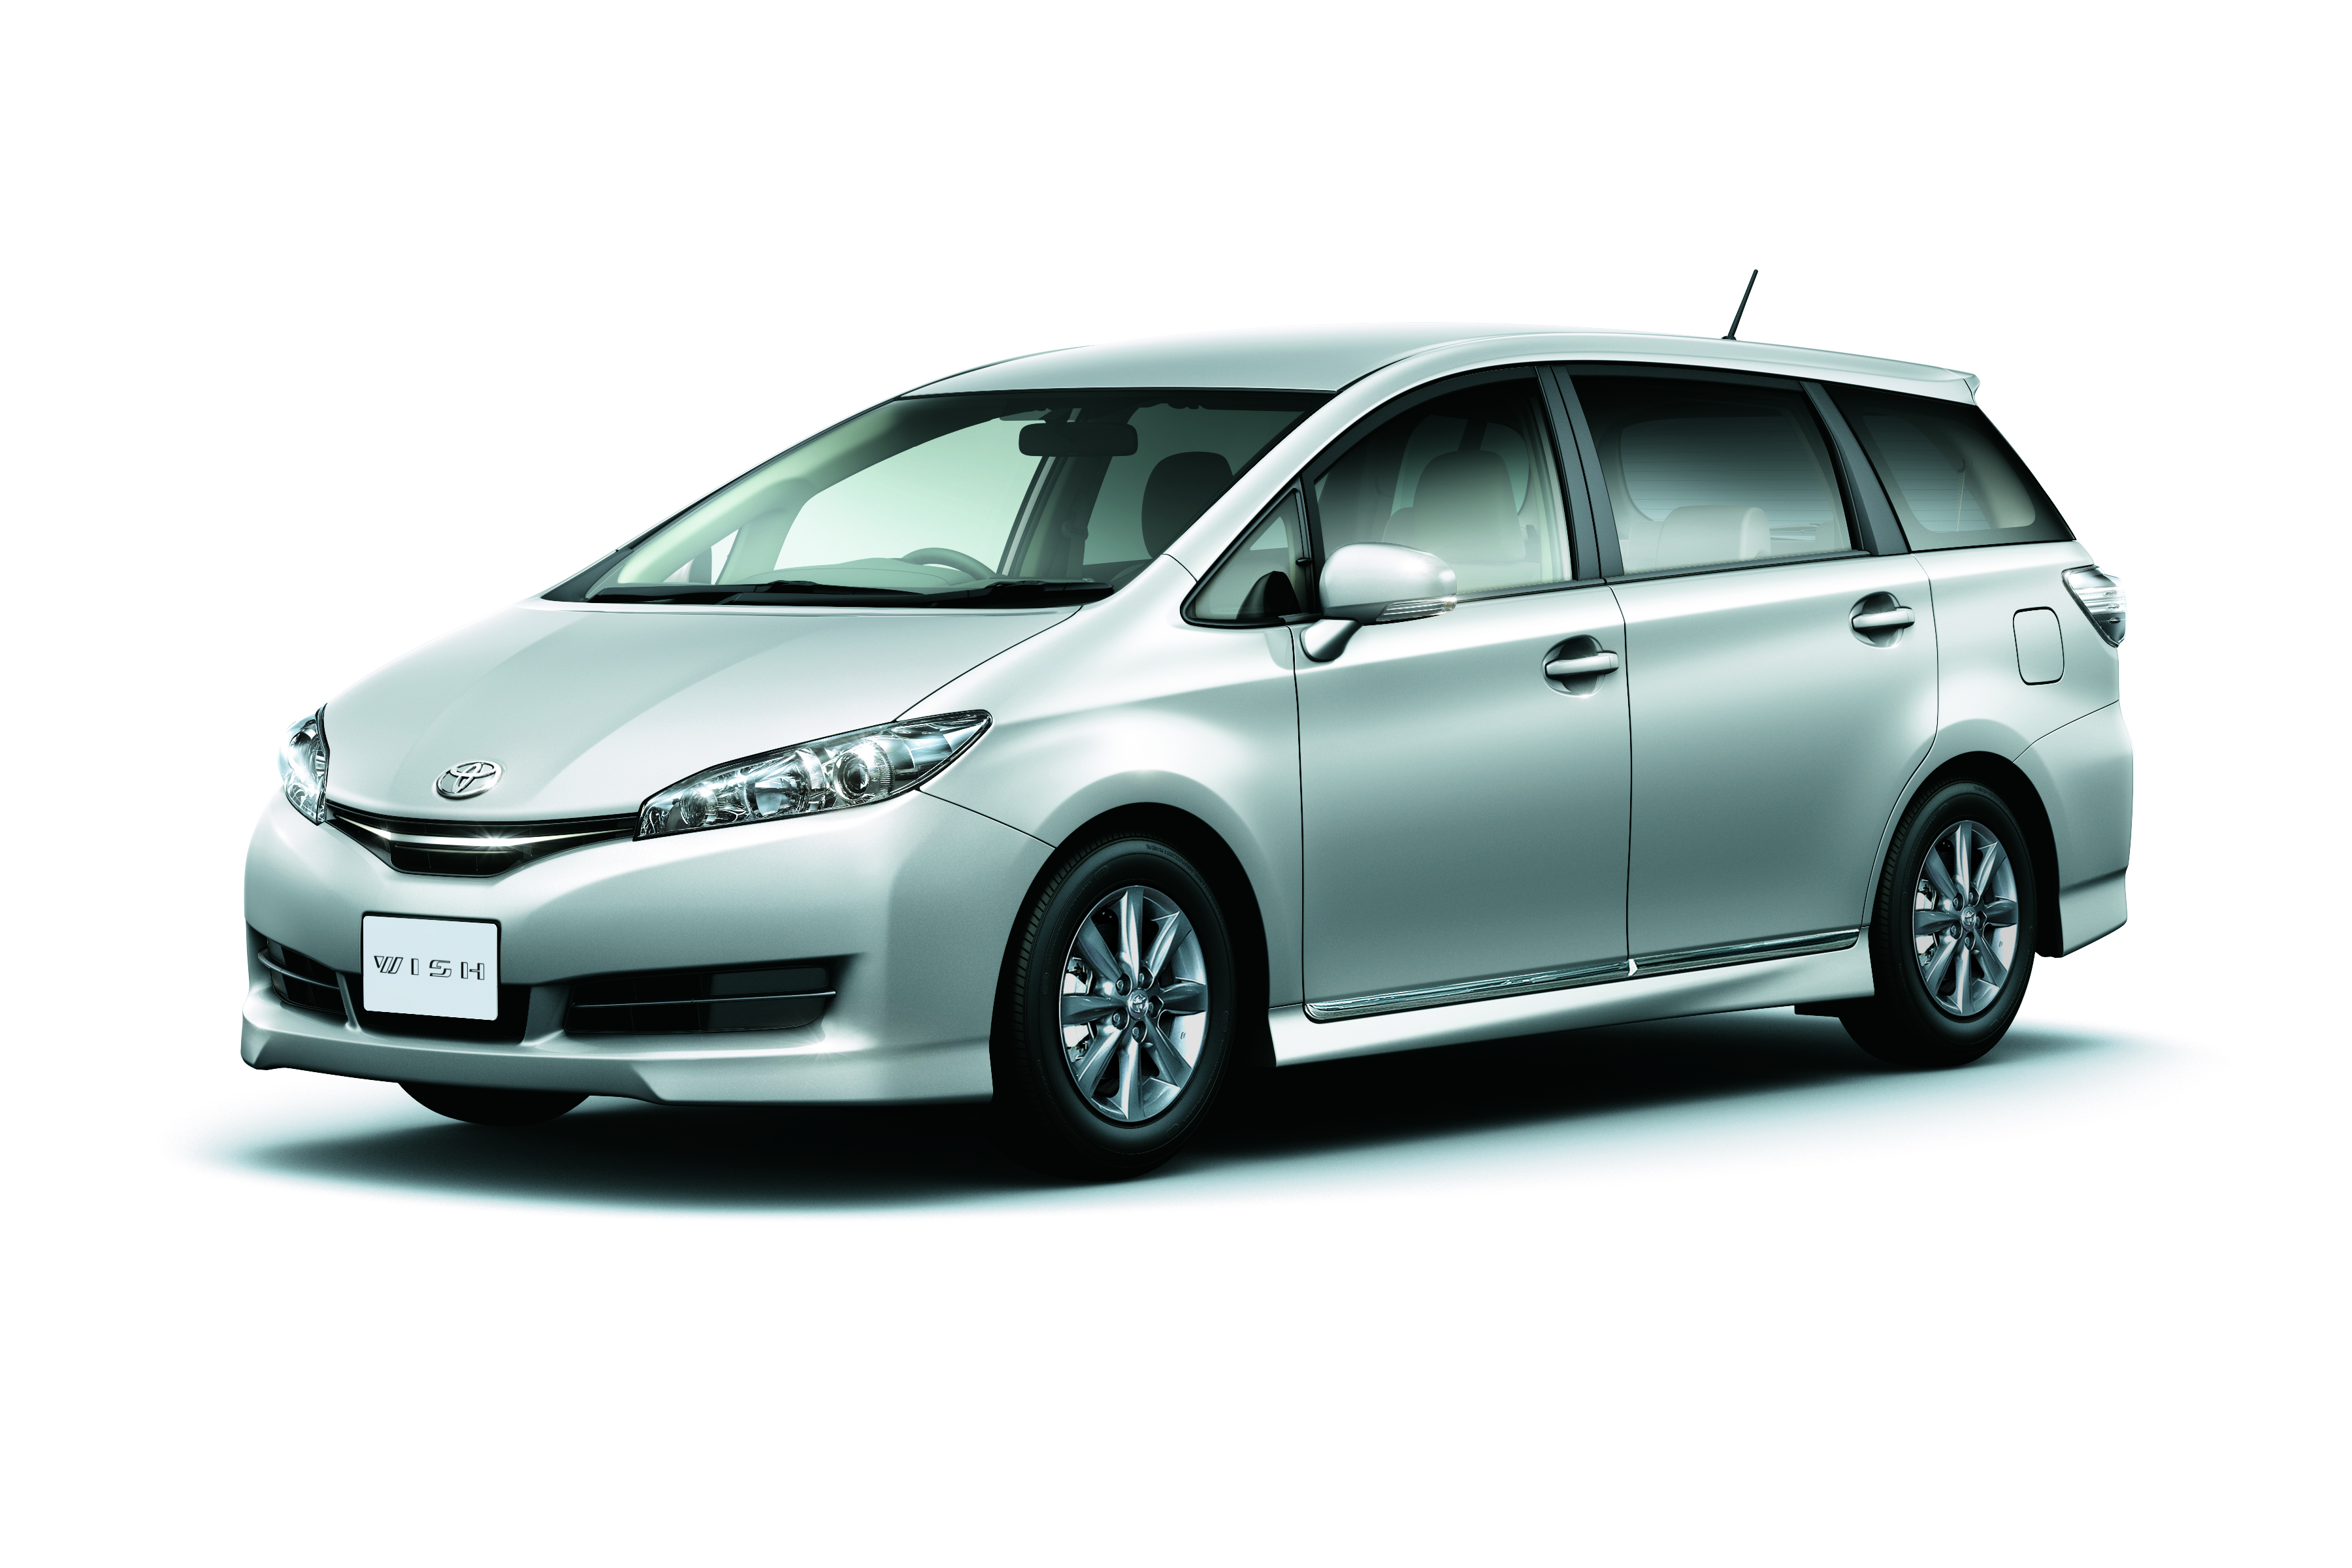 Toyota Wish Popular Rent A Car